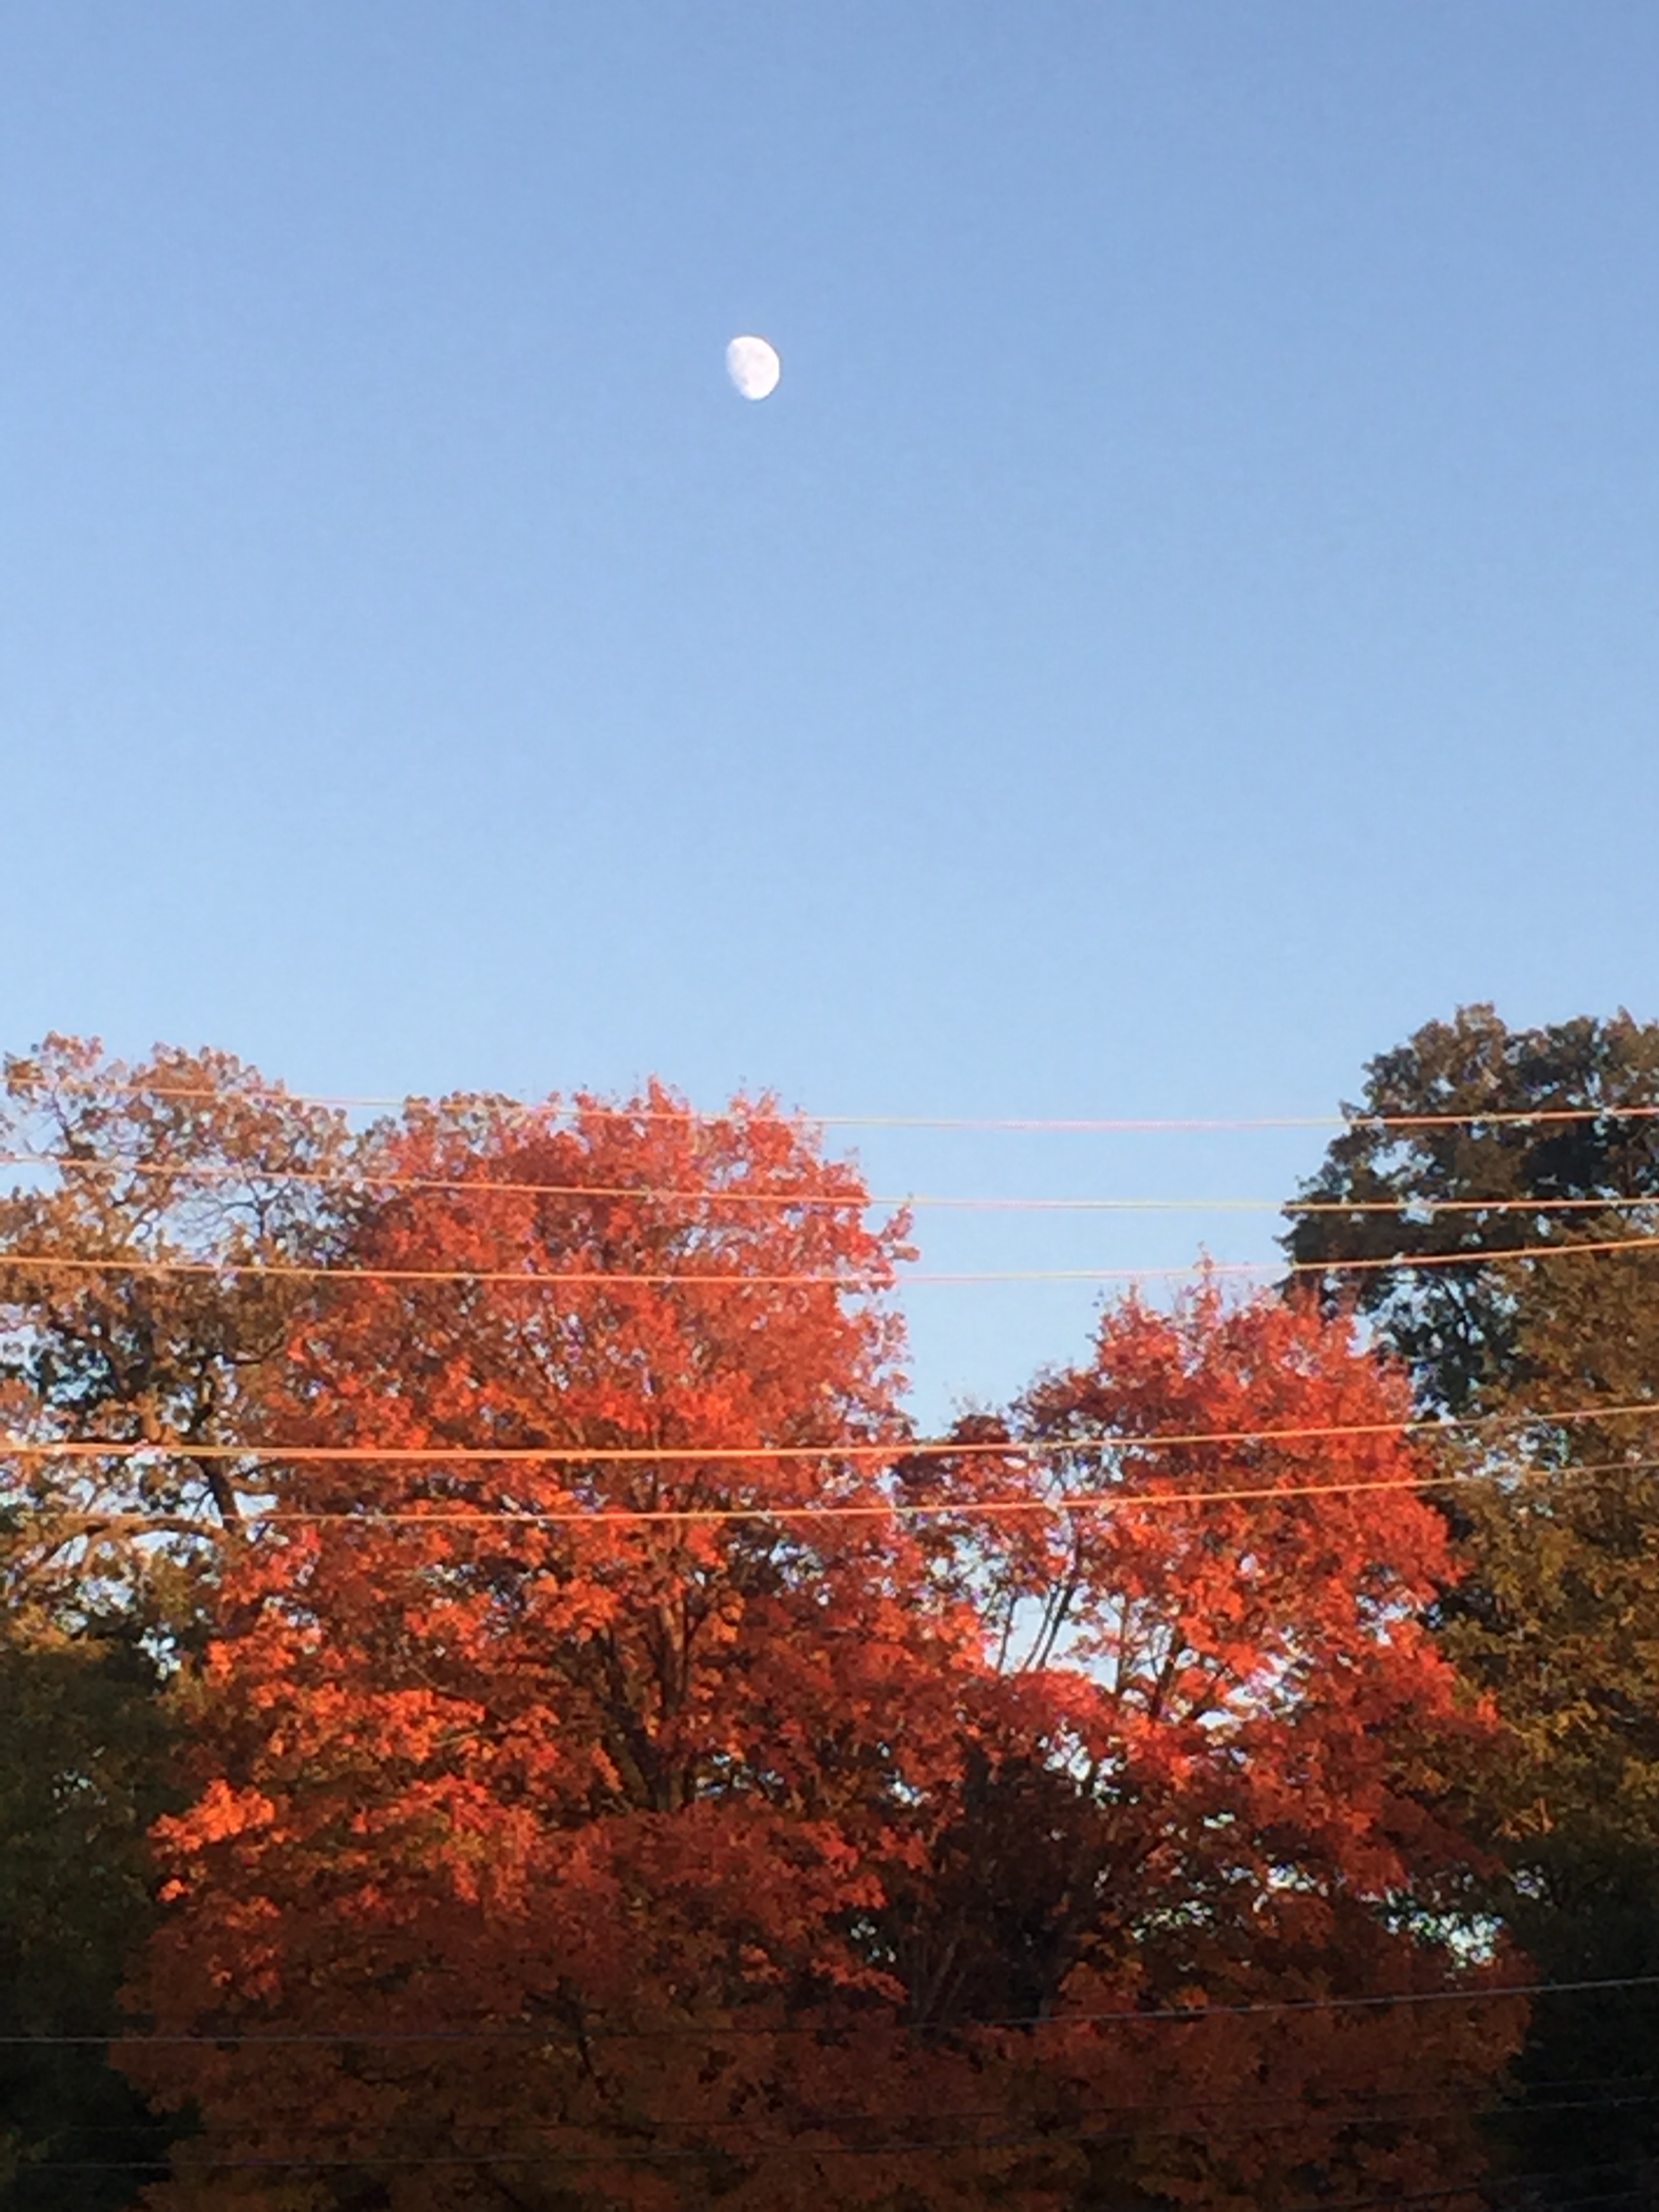 Rising moon above orange autumn trees